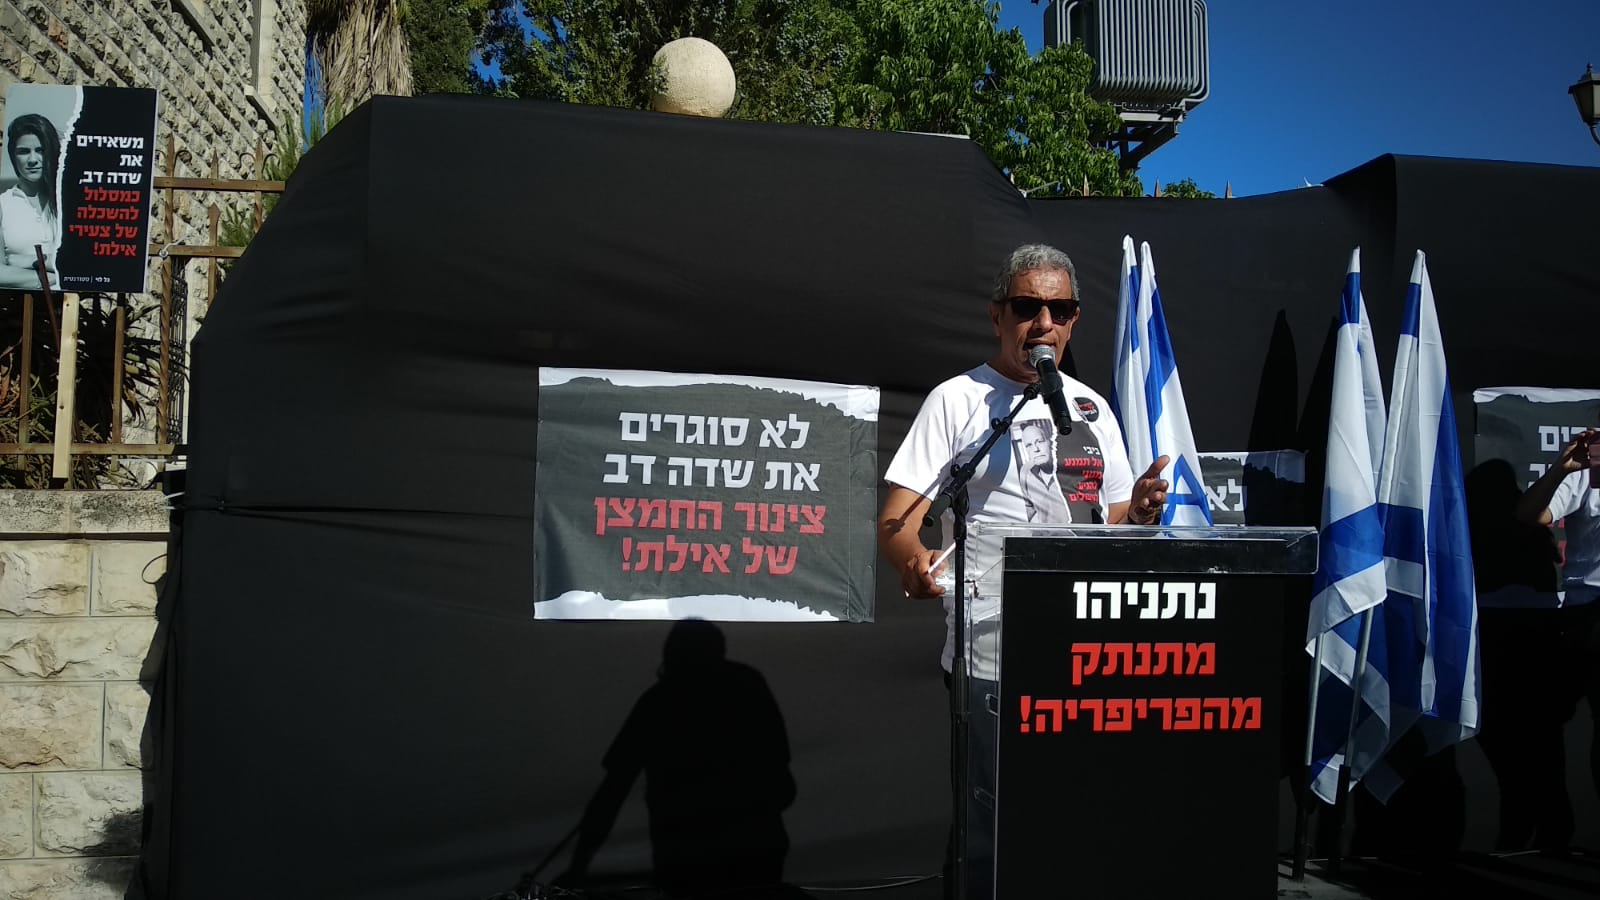 Meir Yitzhak Halevi, mayor of Eilat, protesting the closure of Sde Dov airport, Jerusalem, June 17, 2019 (Photograph: Omer Cohen)